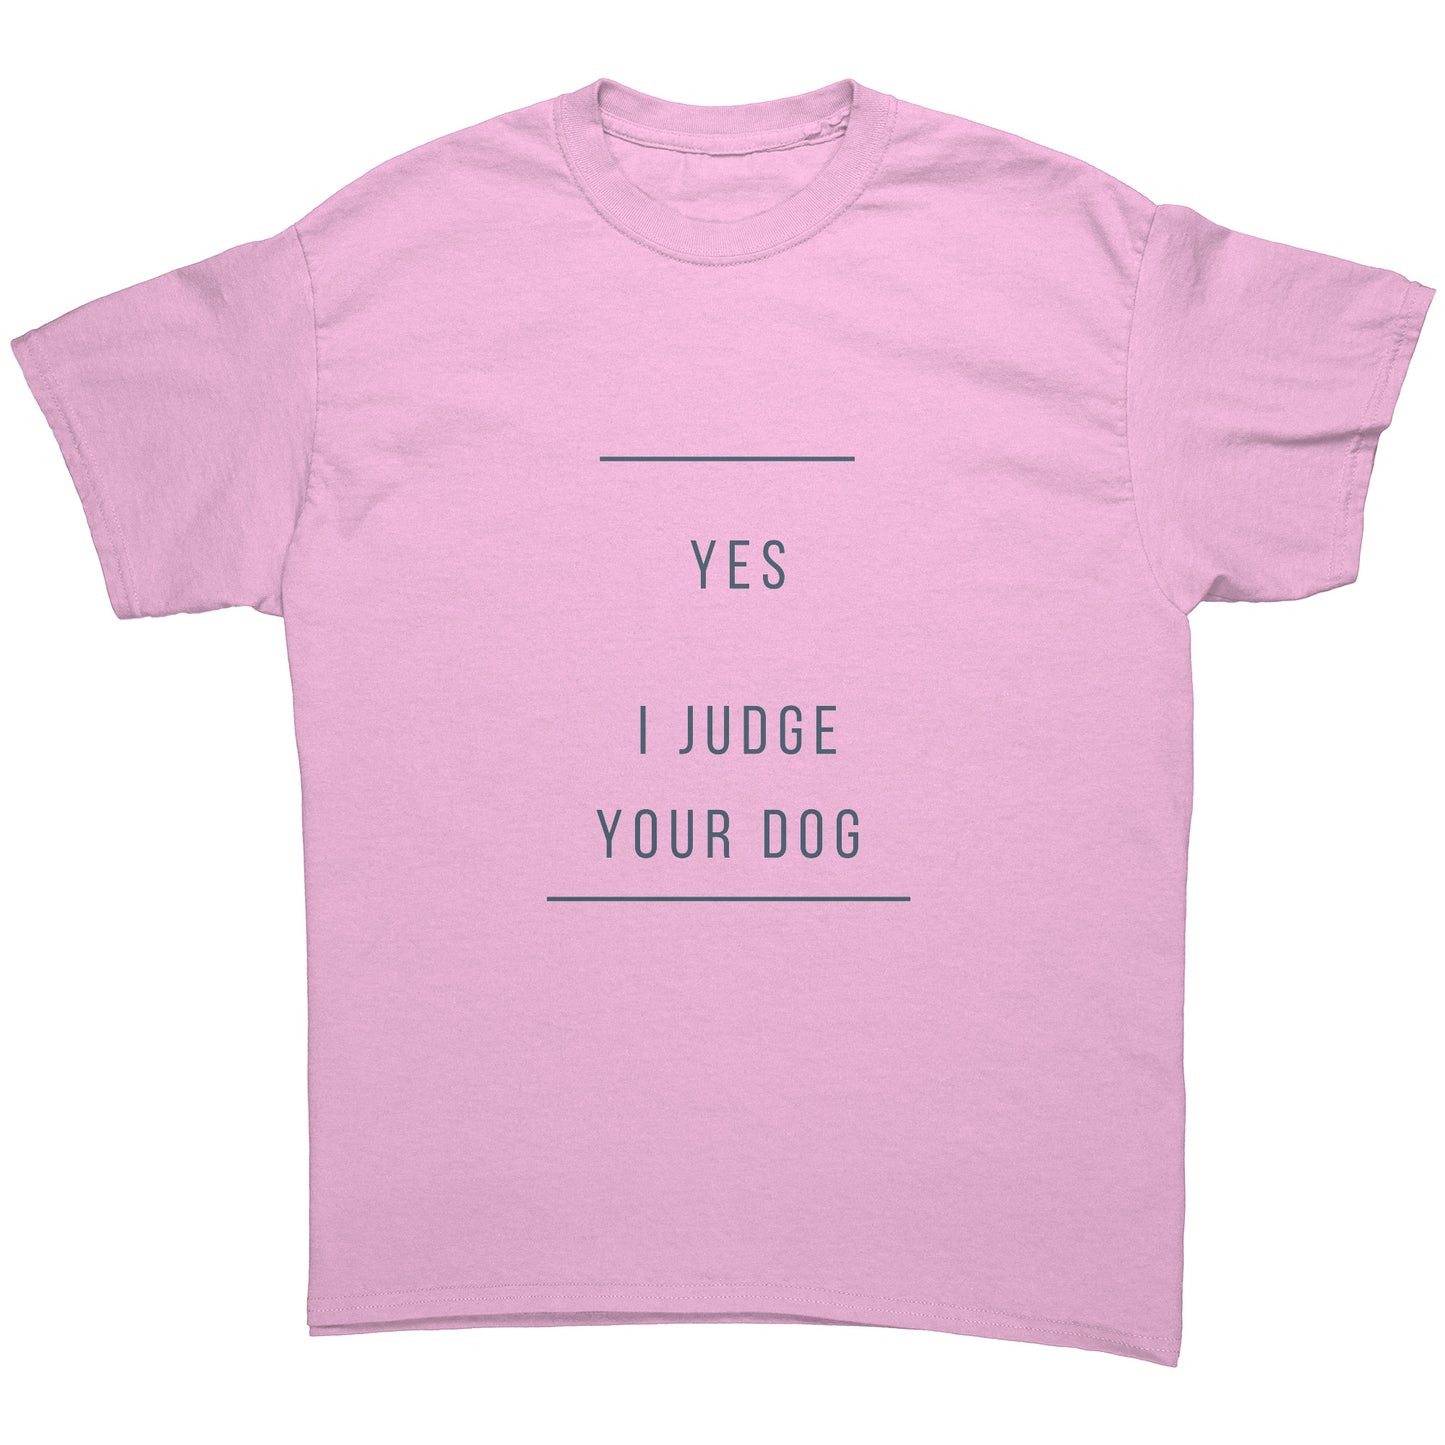 YES I JUDGE YOUR DOG